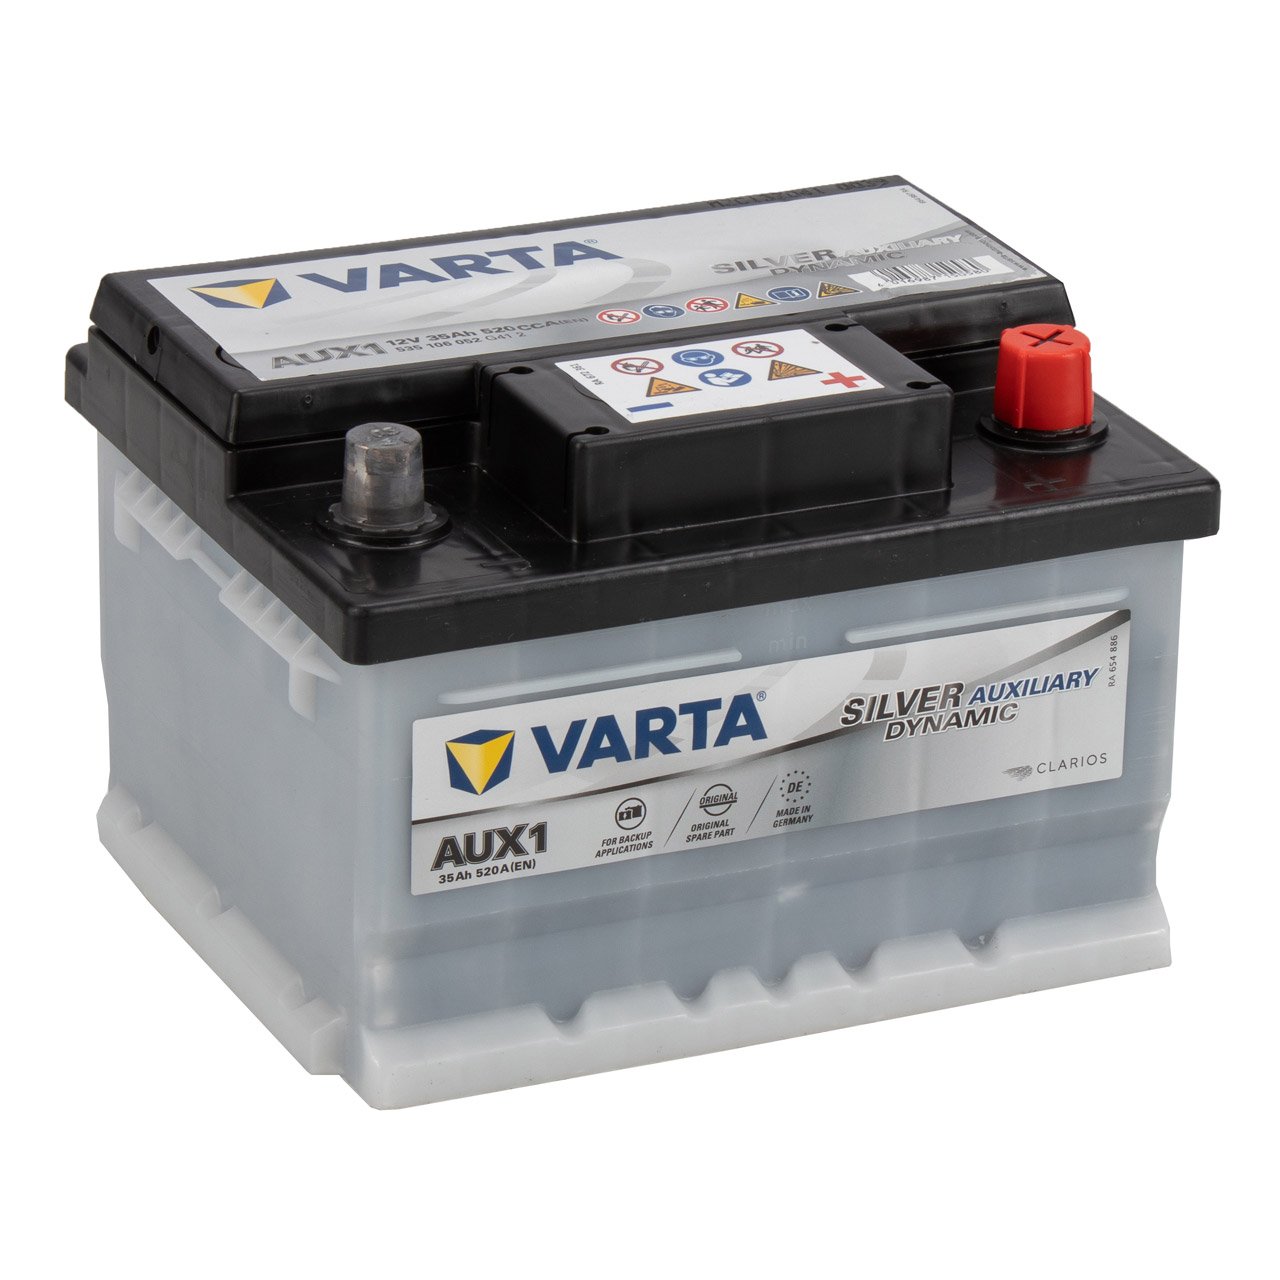 VARTA Aux1 SILVER dynamic AUX Stützbatterie 12V 35Ah EN520A 2305410001